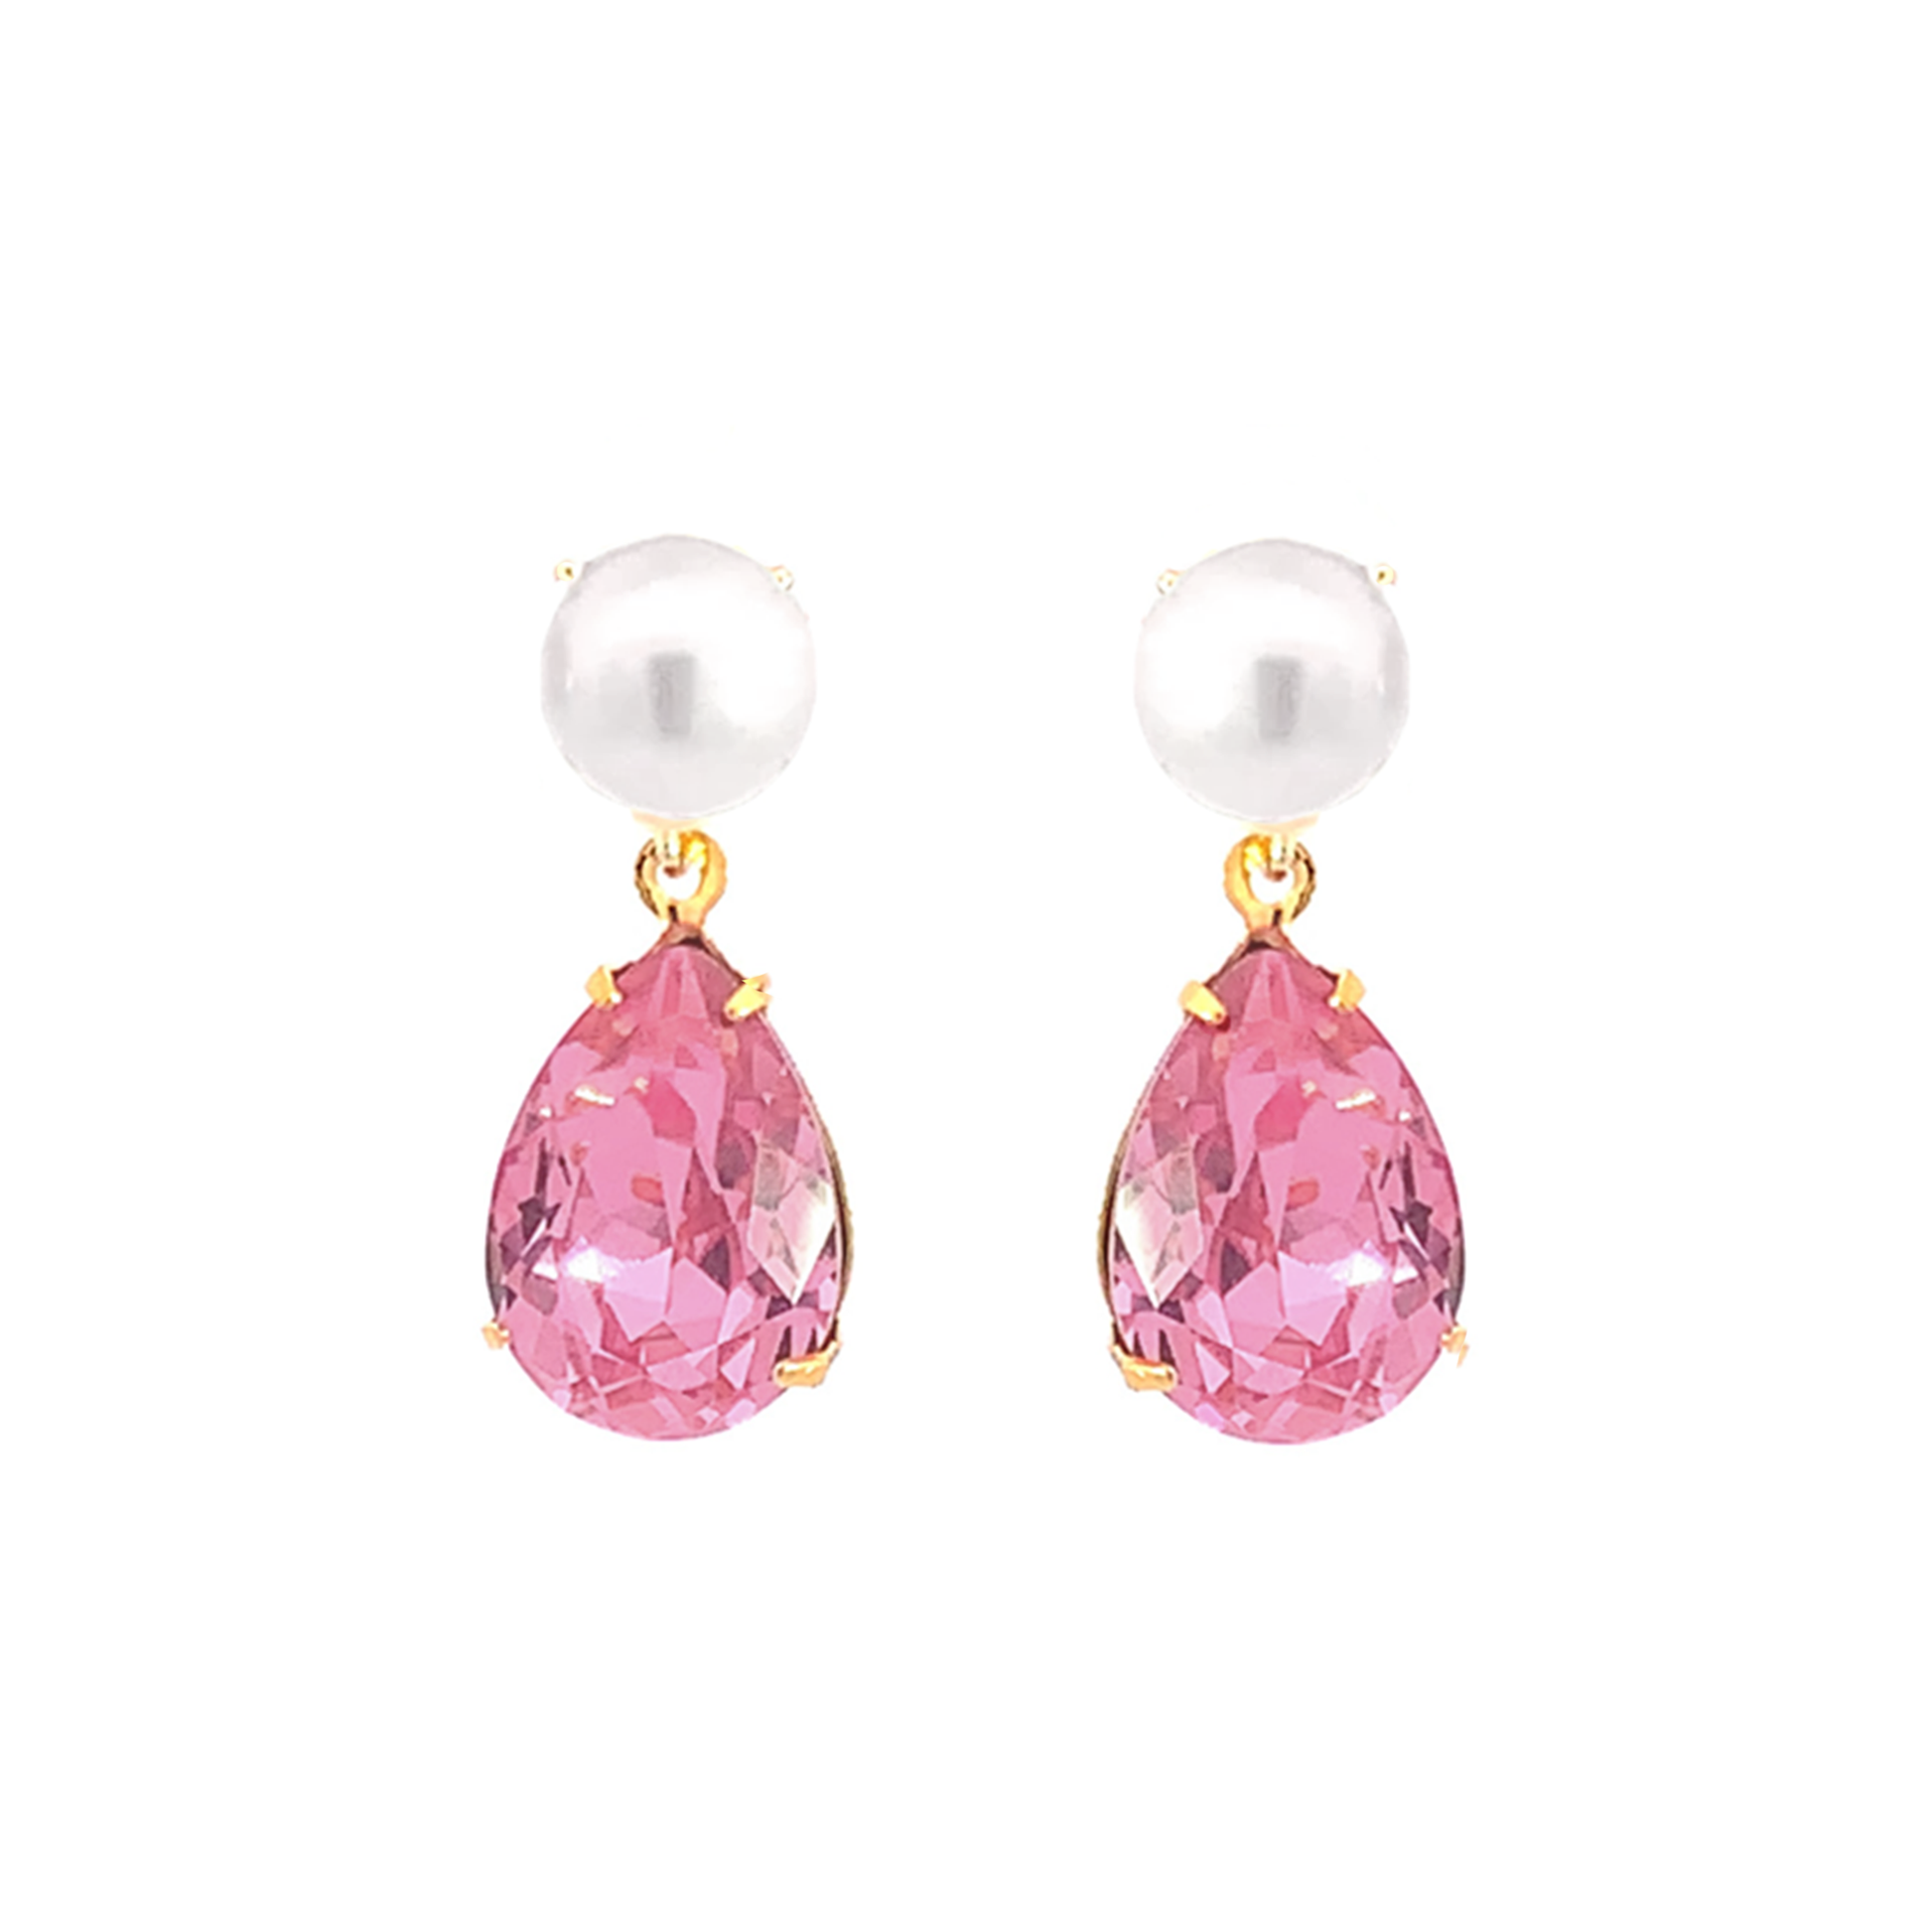 October birthstone pearl earrings gold